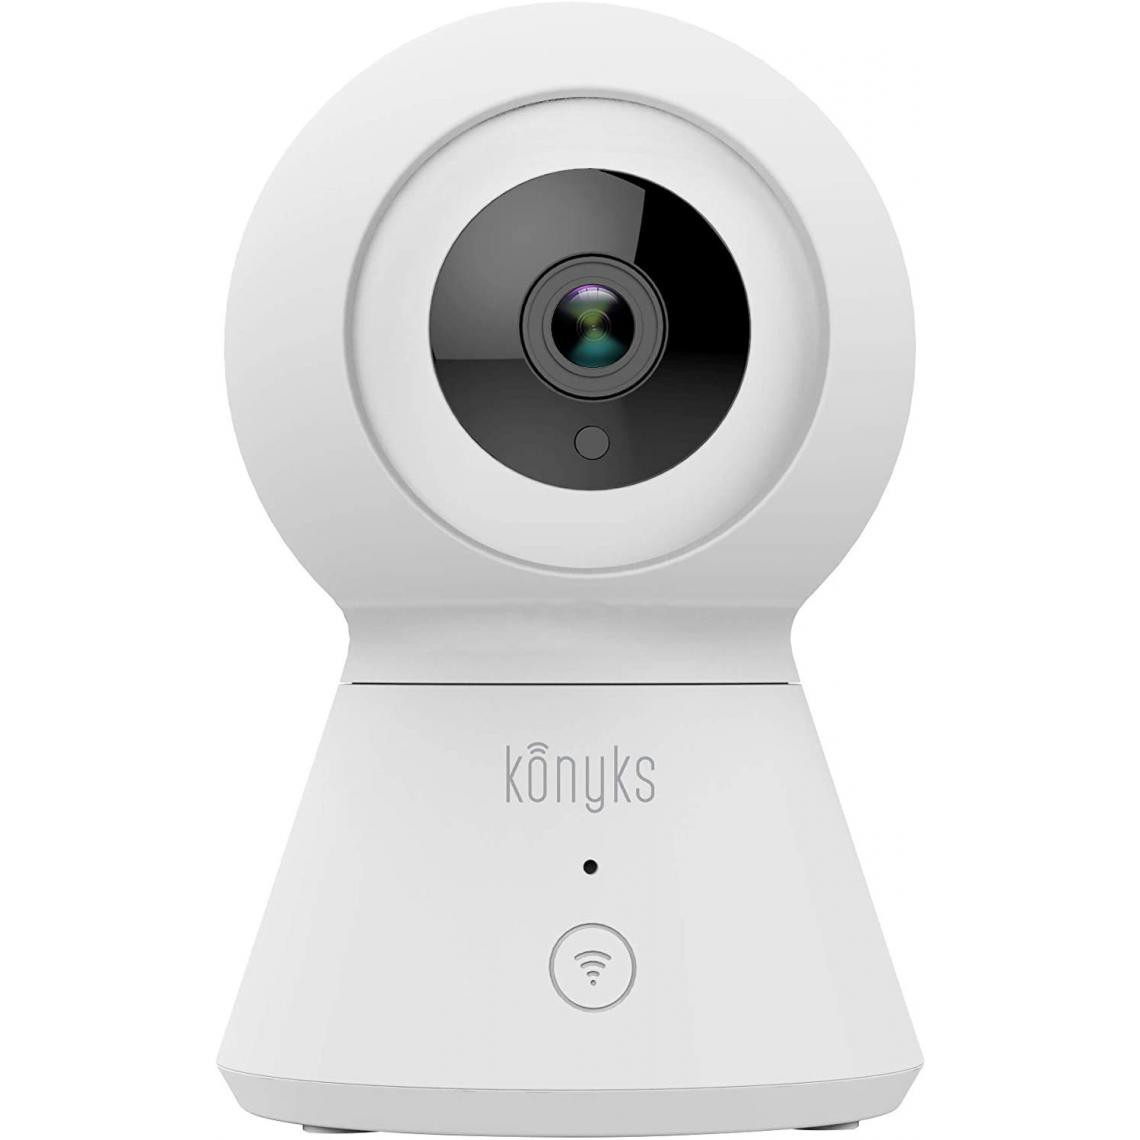 Konyks - Camini Max - Caméra Wi-Fi motorisée avec mode vie privée - Caméra de surveillance connectée